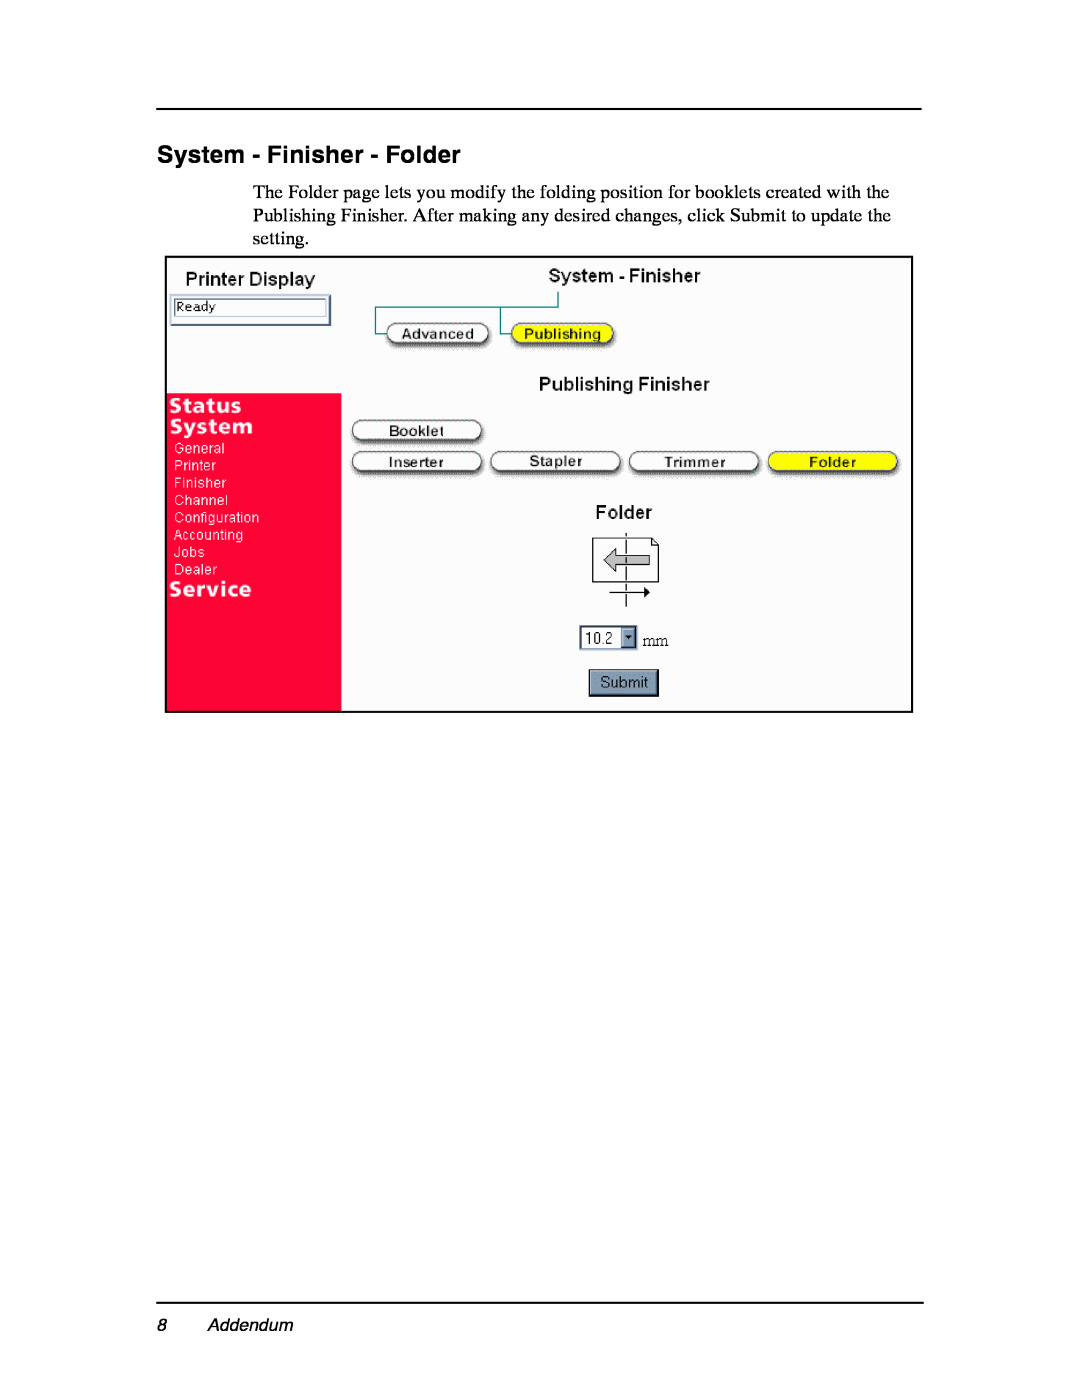 Ricoh DDP 184 manual System - Finisher - Folder, Addendum 